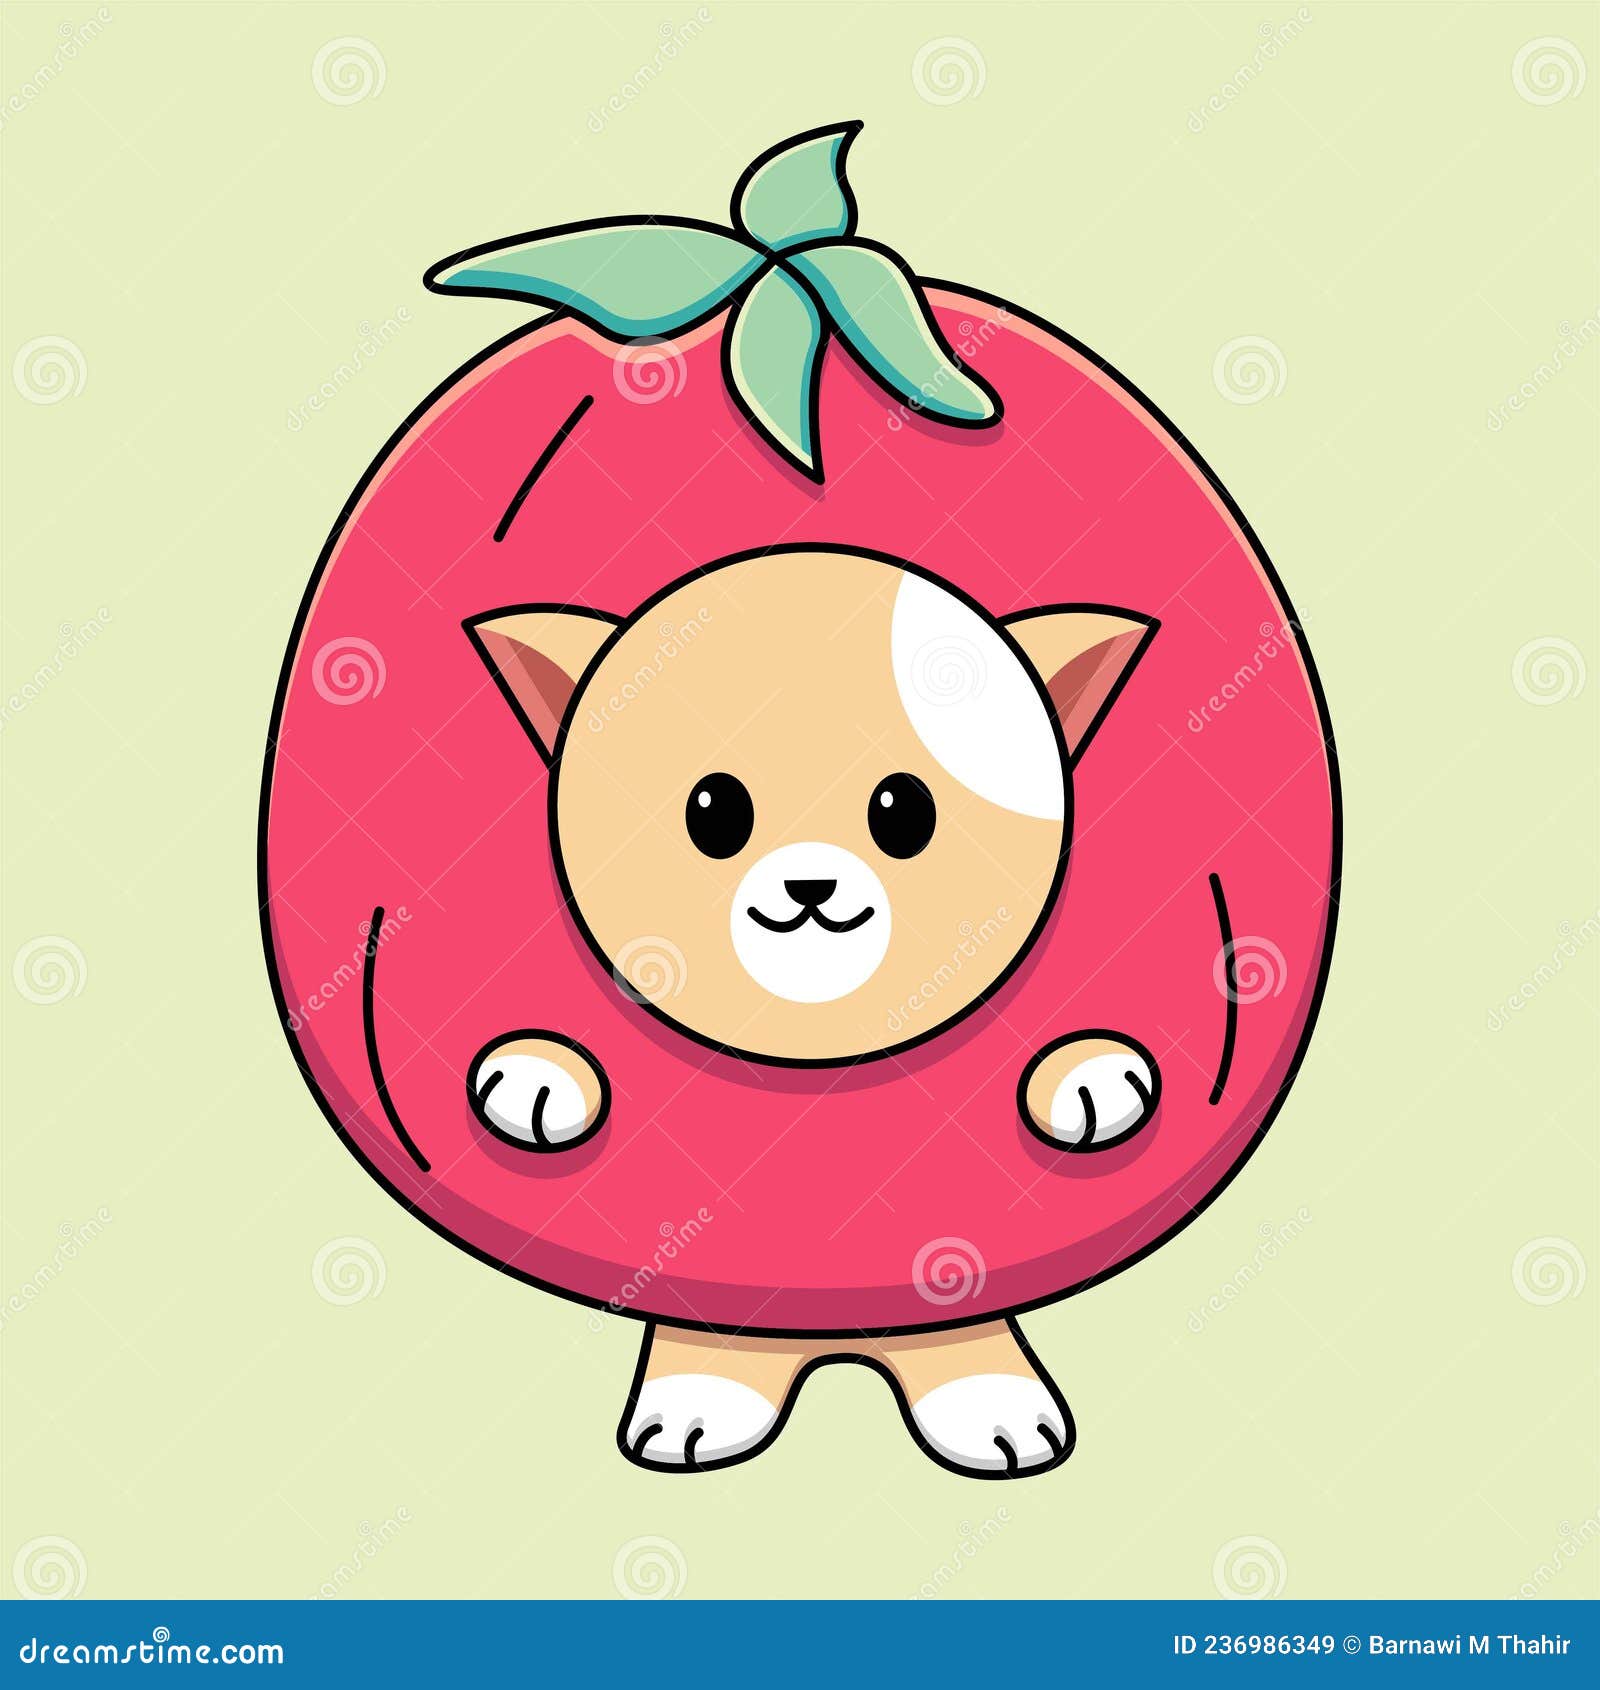 cute cat in tomato costum cartoon